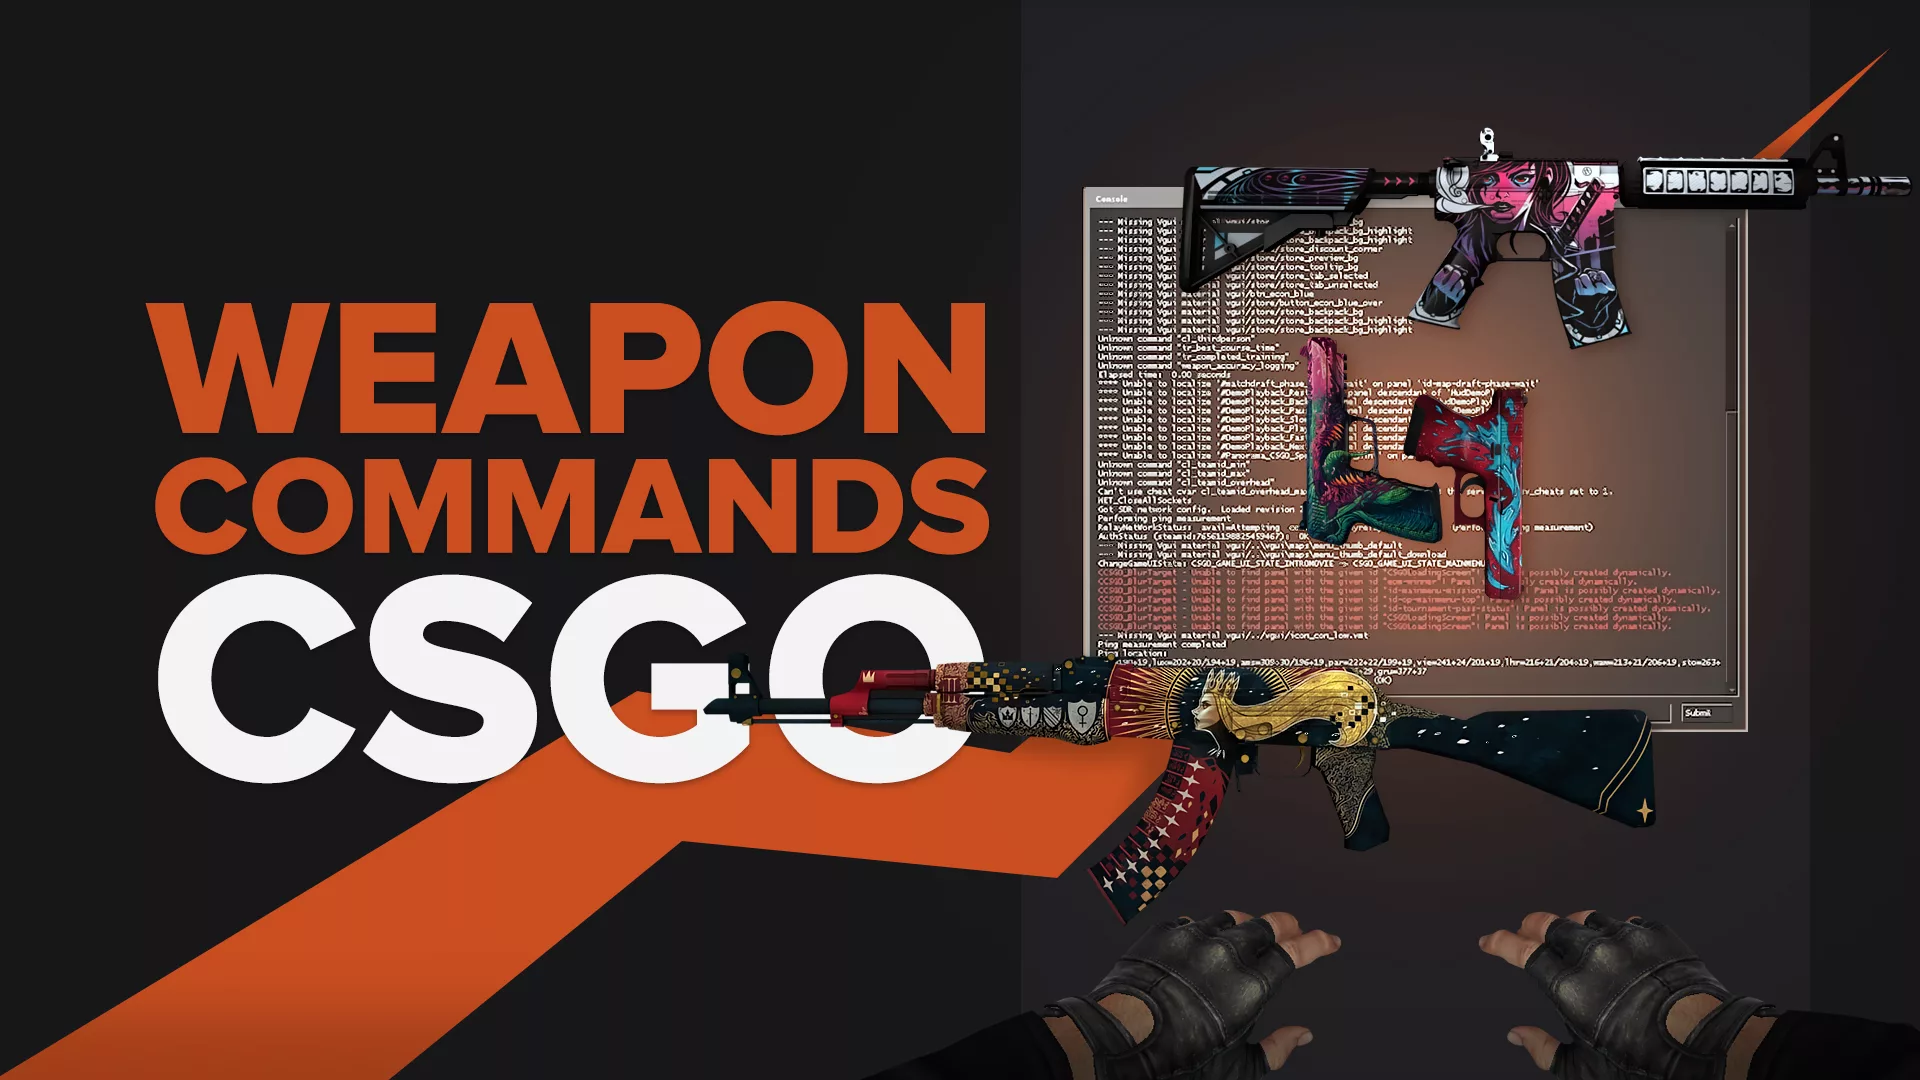 All Weapon Commands CS:GO